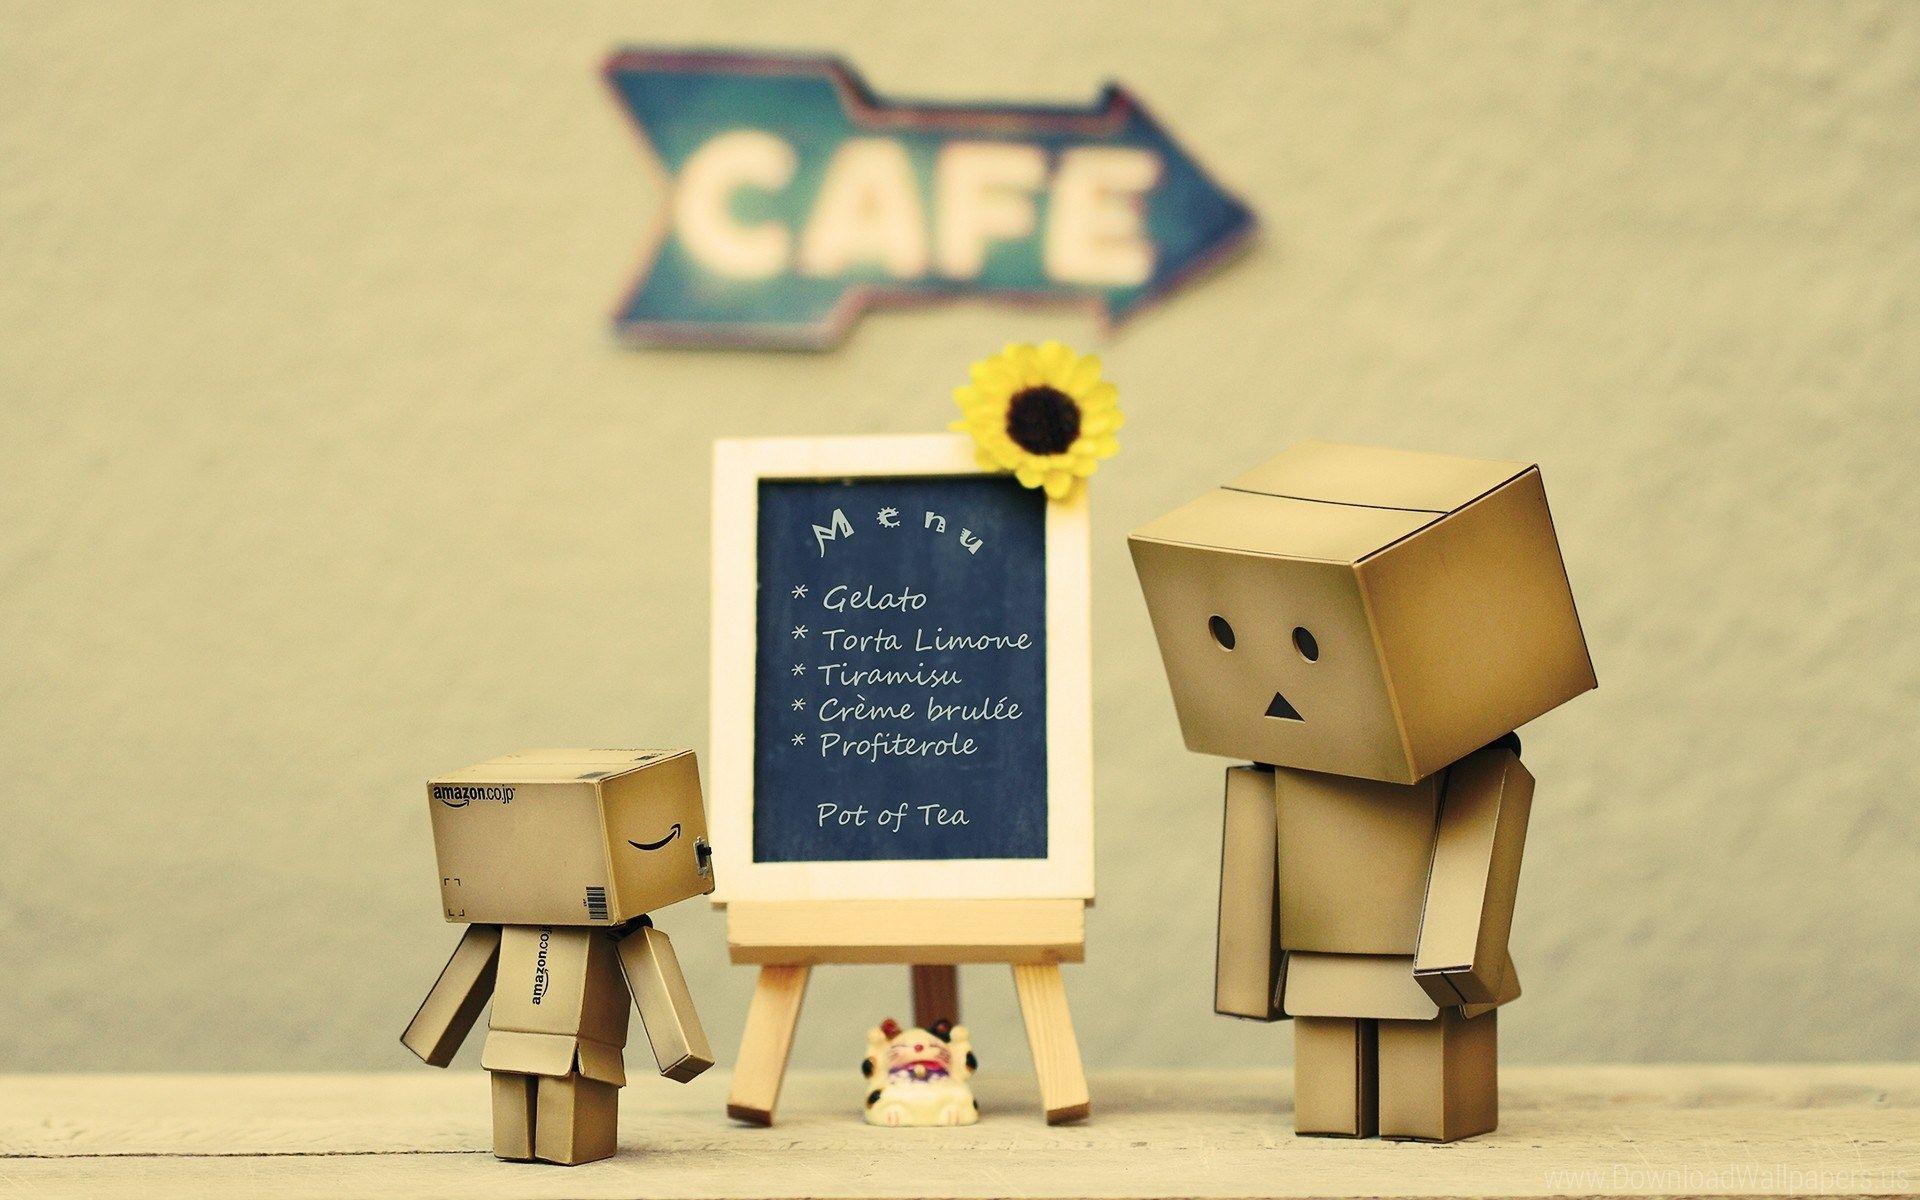 Cafes, Cardboard Robot, Danboard, Mood, Steam Wallpaper